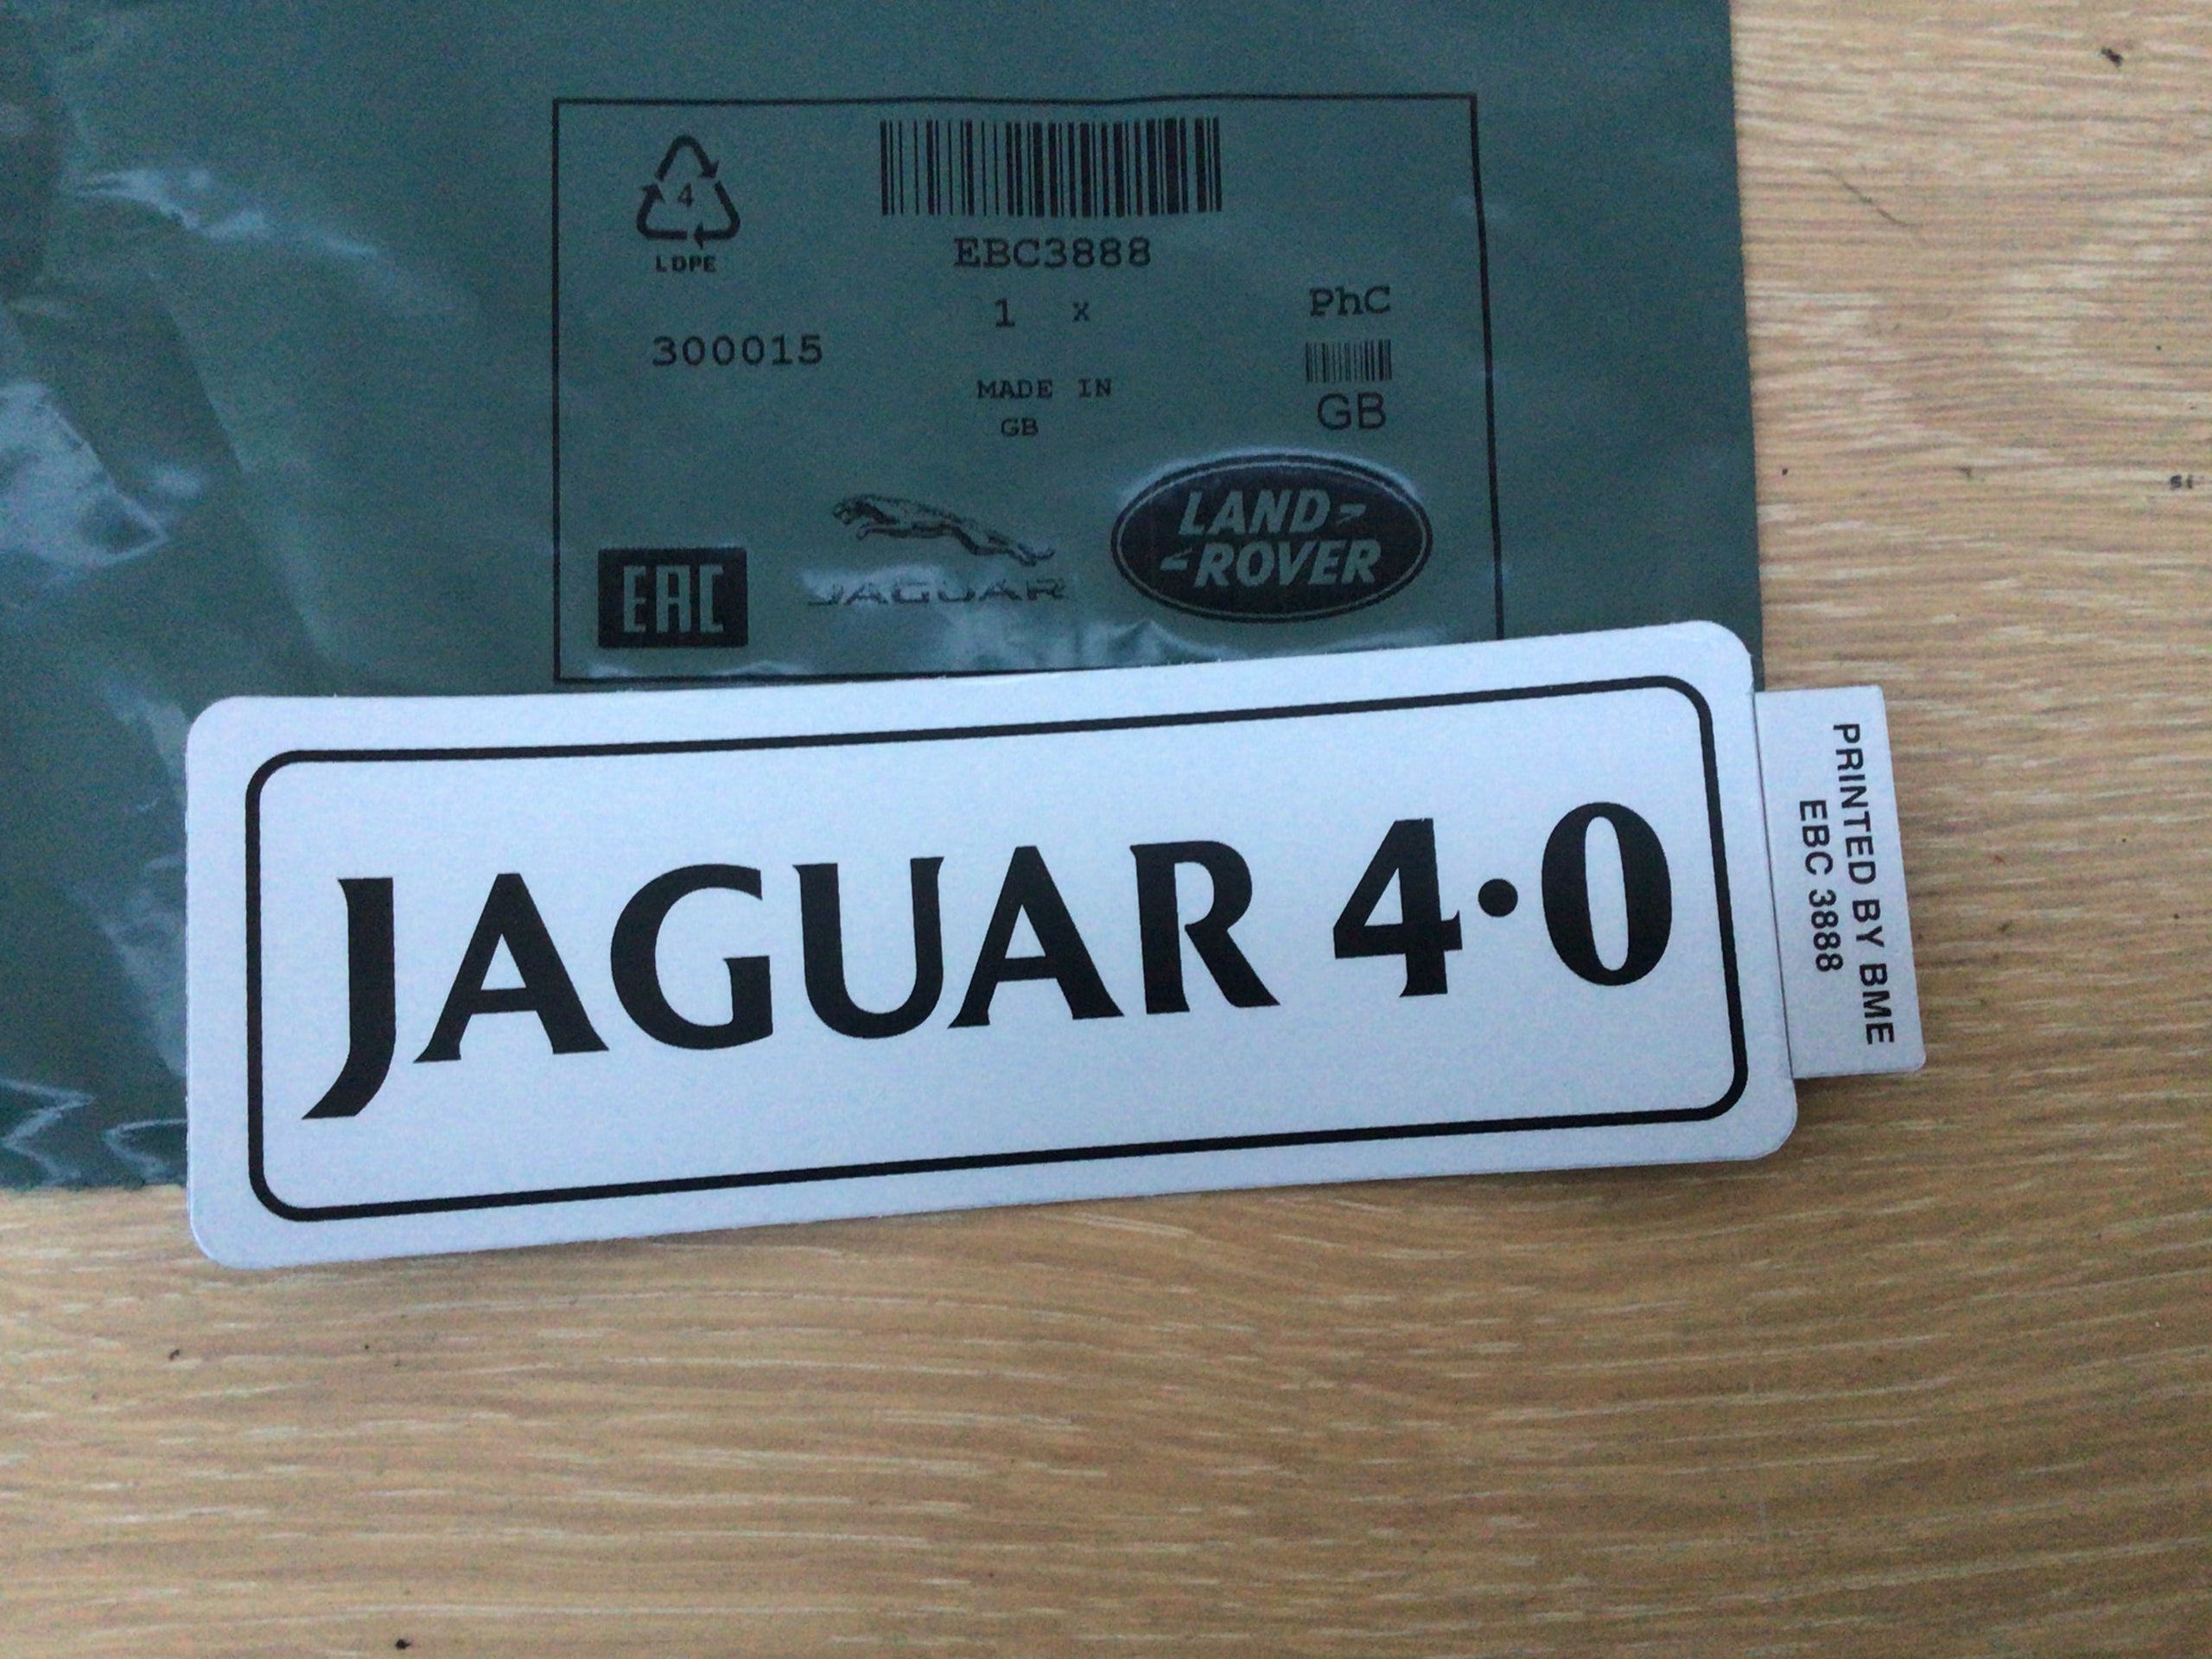 OMBER Wetterfeste Auto-Abdeckung für Jaguar XJ XJ LWB I-PACE F